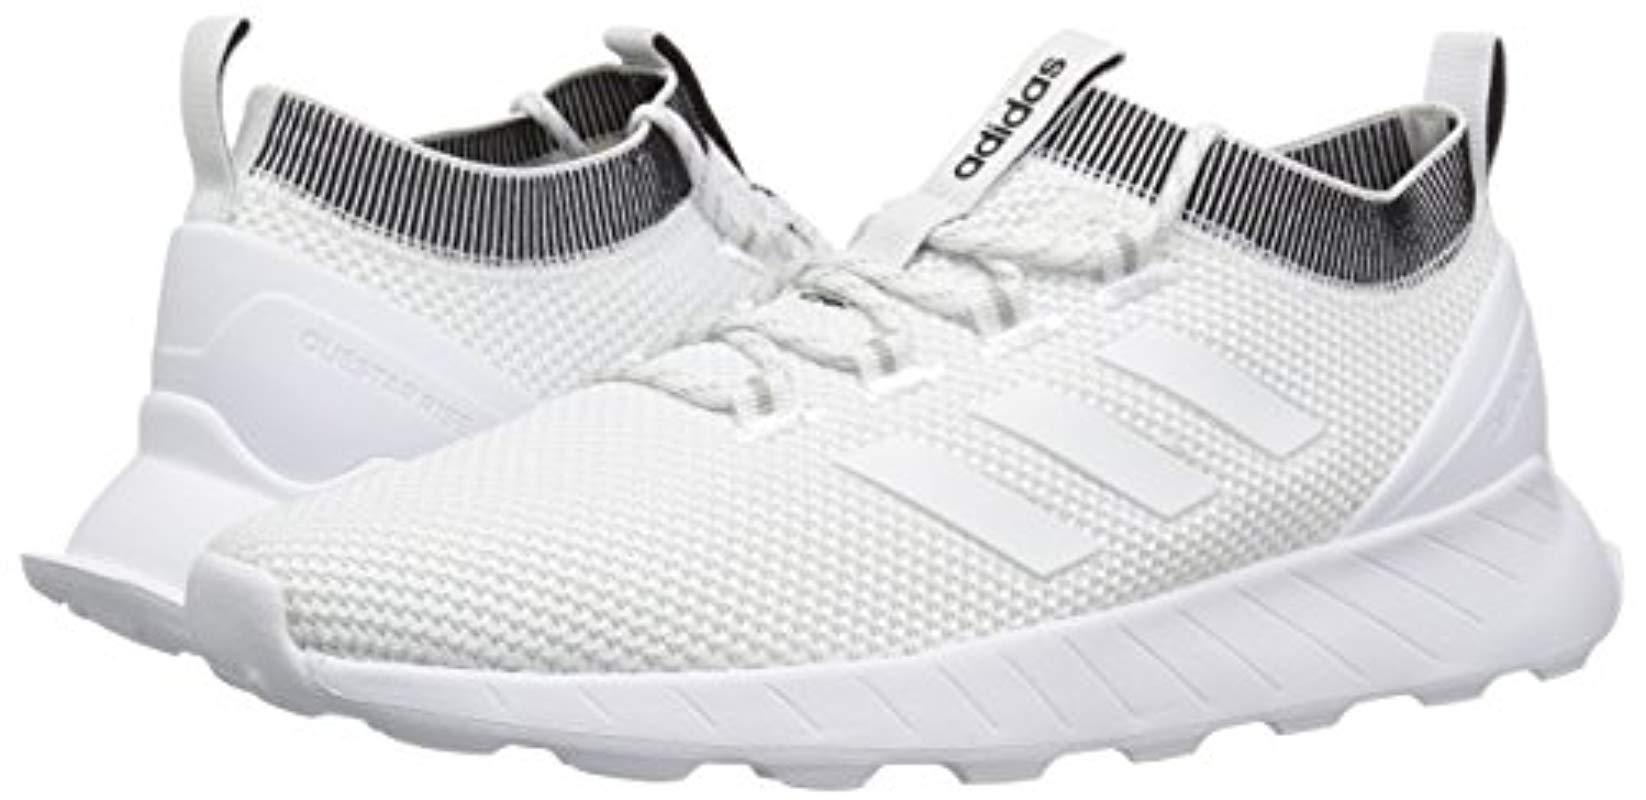 adidas Questar Ride Running Shoes S 